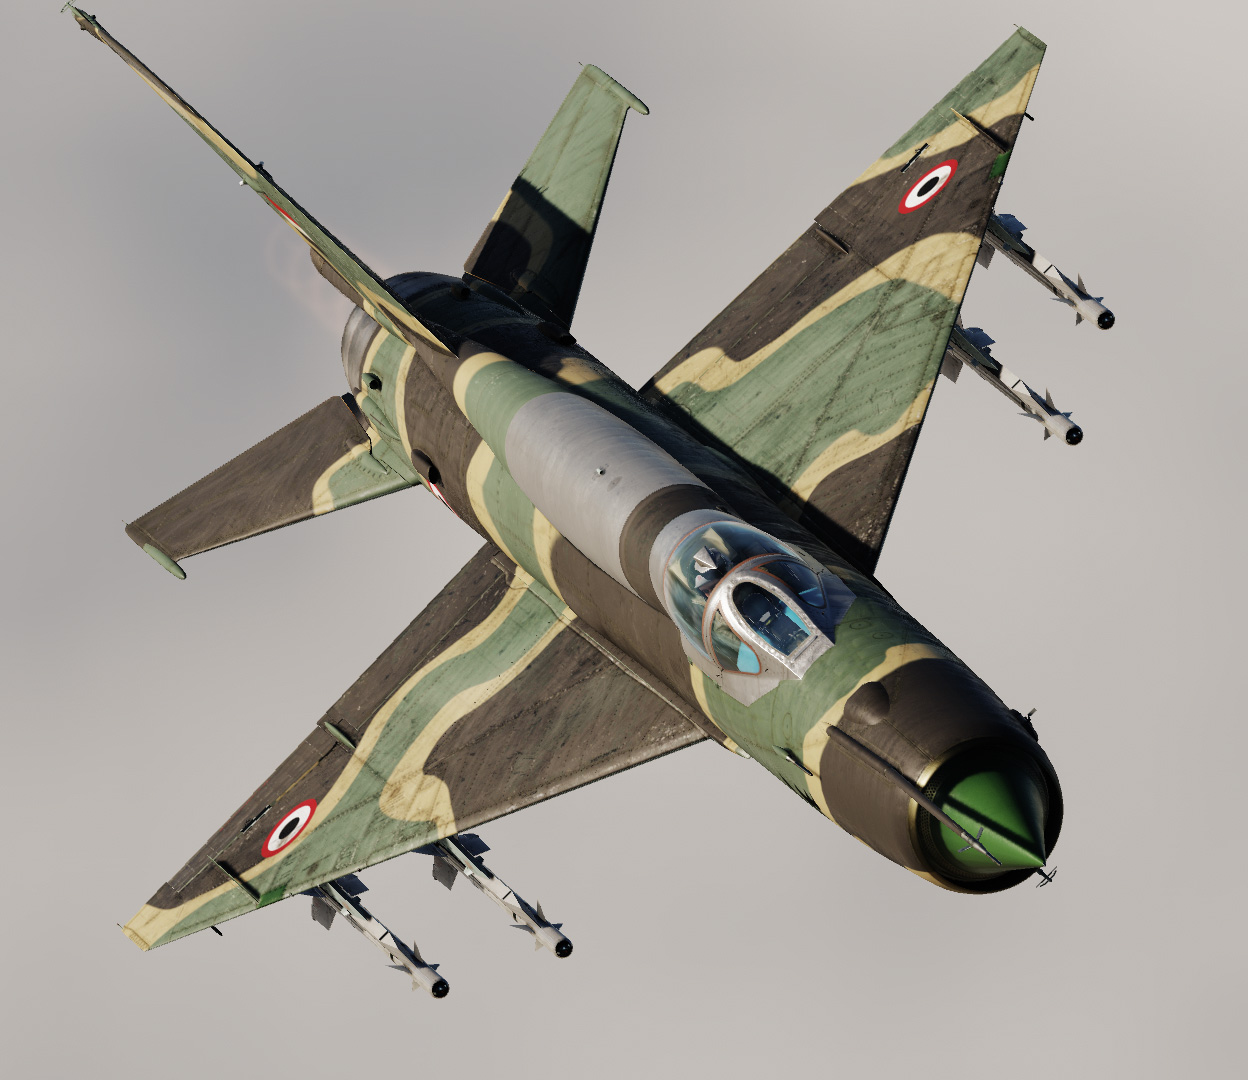 Egyptian MiG-21PFS "Nile Valley camo"